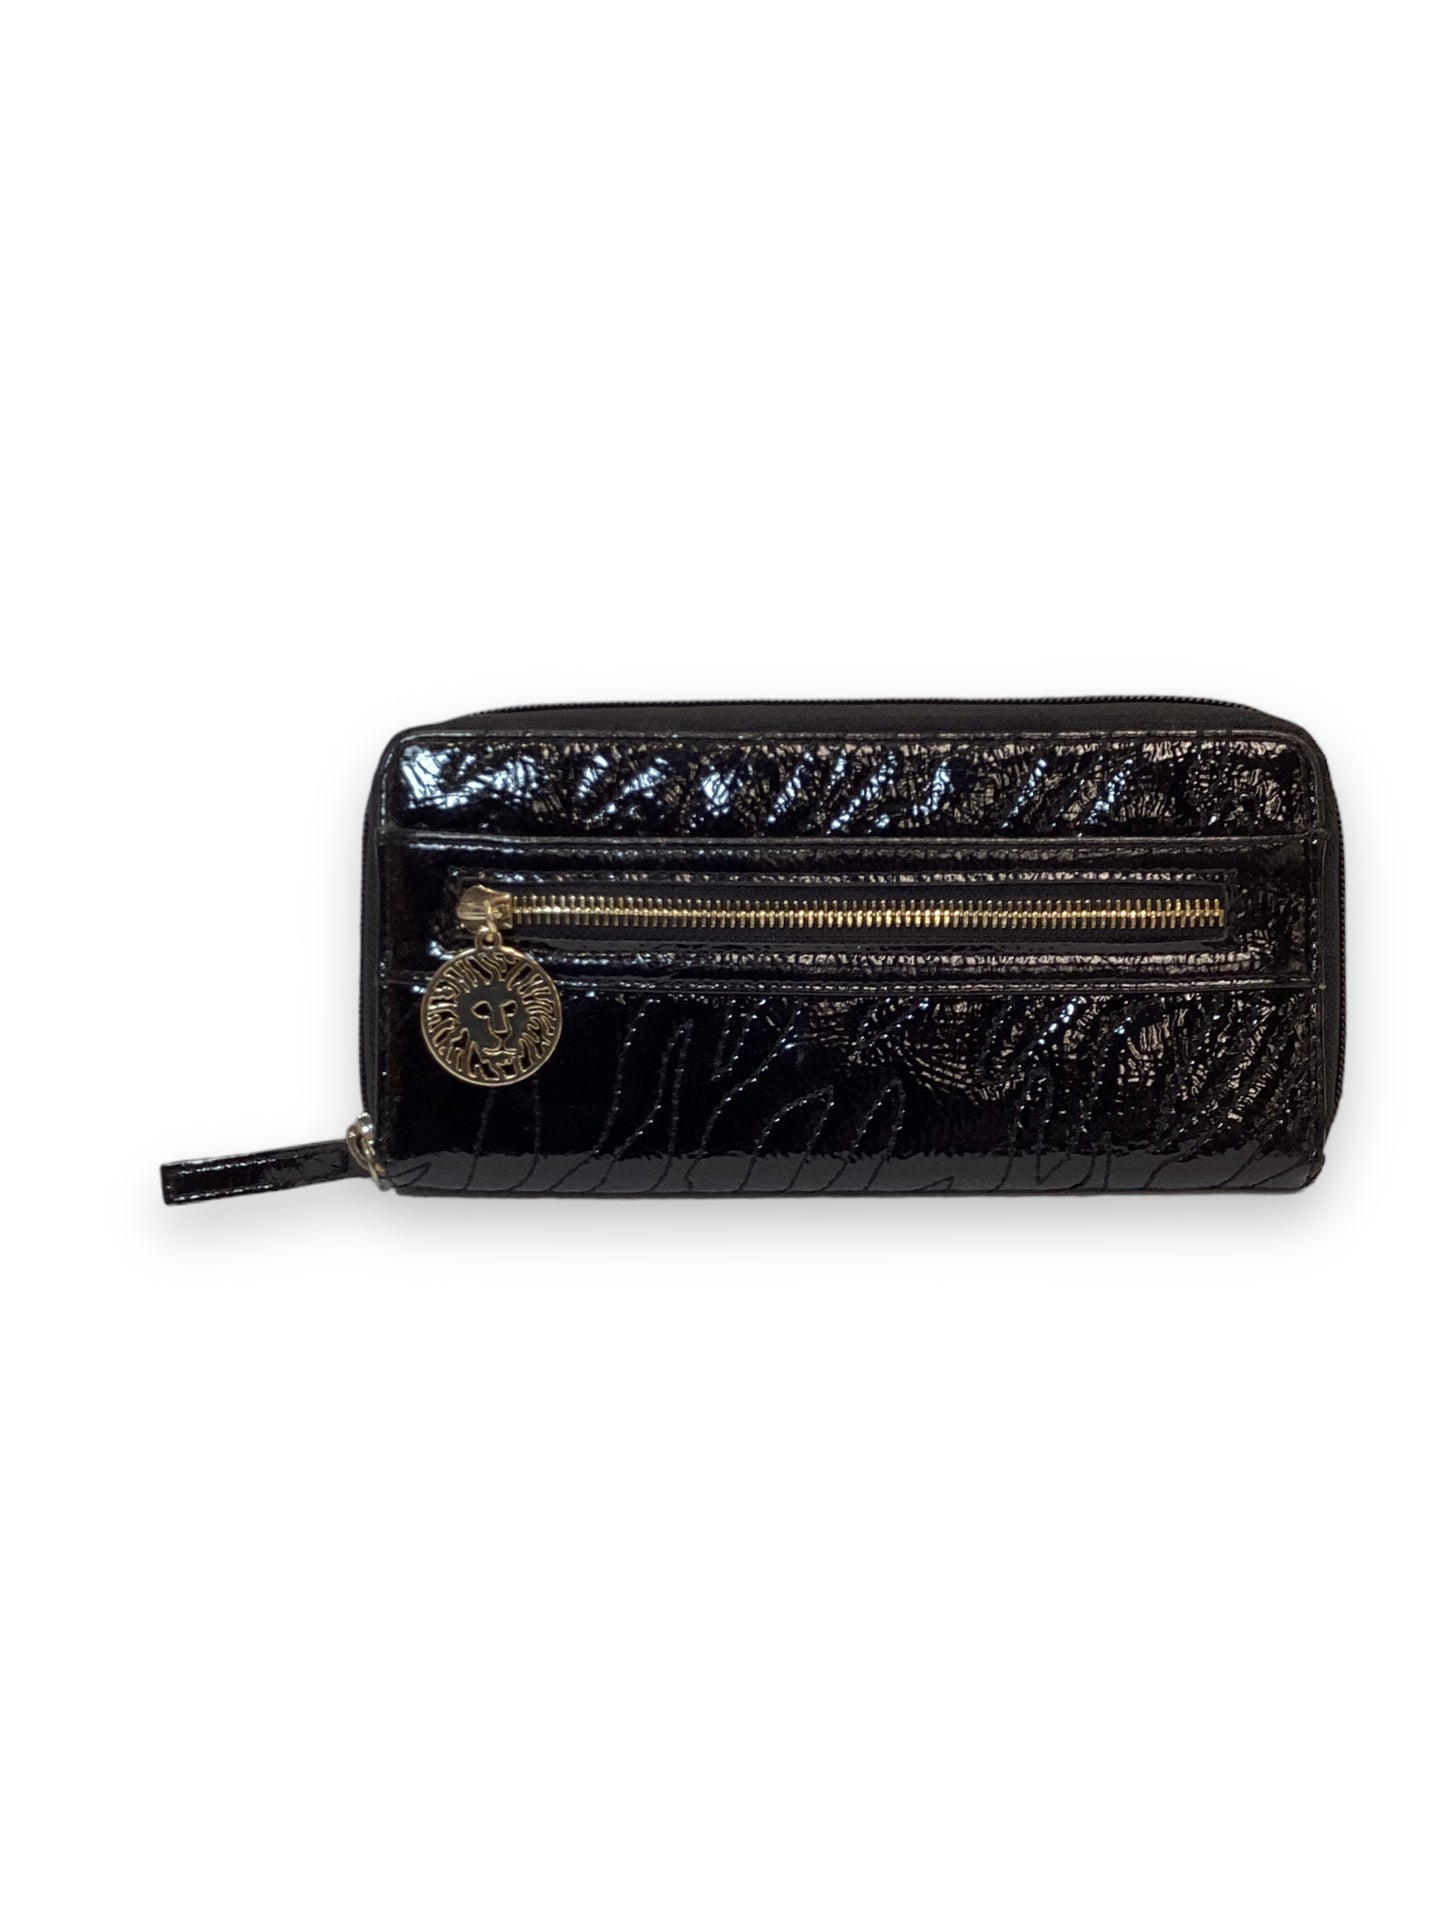 Wallet By Anne Klein  Size: Large